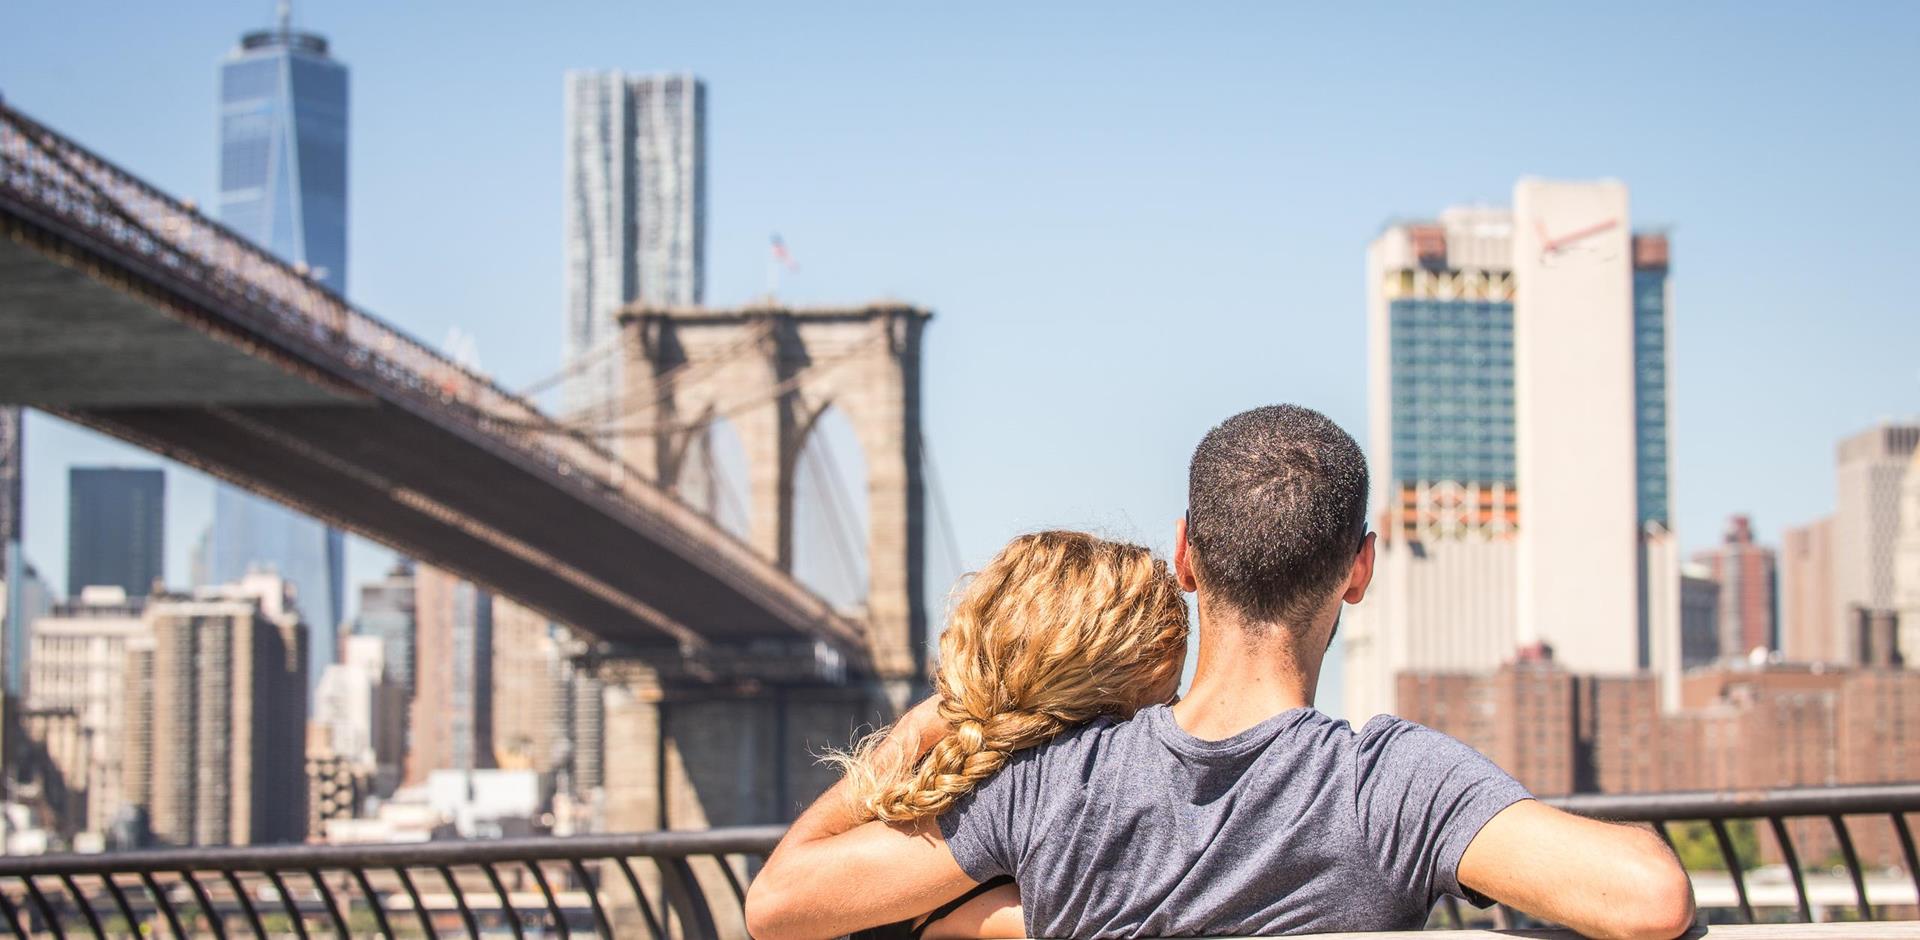 Honeymoon couple on a bench under Brooklyn Bridge, New York